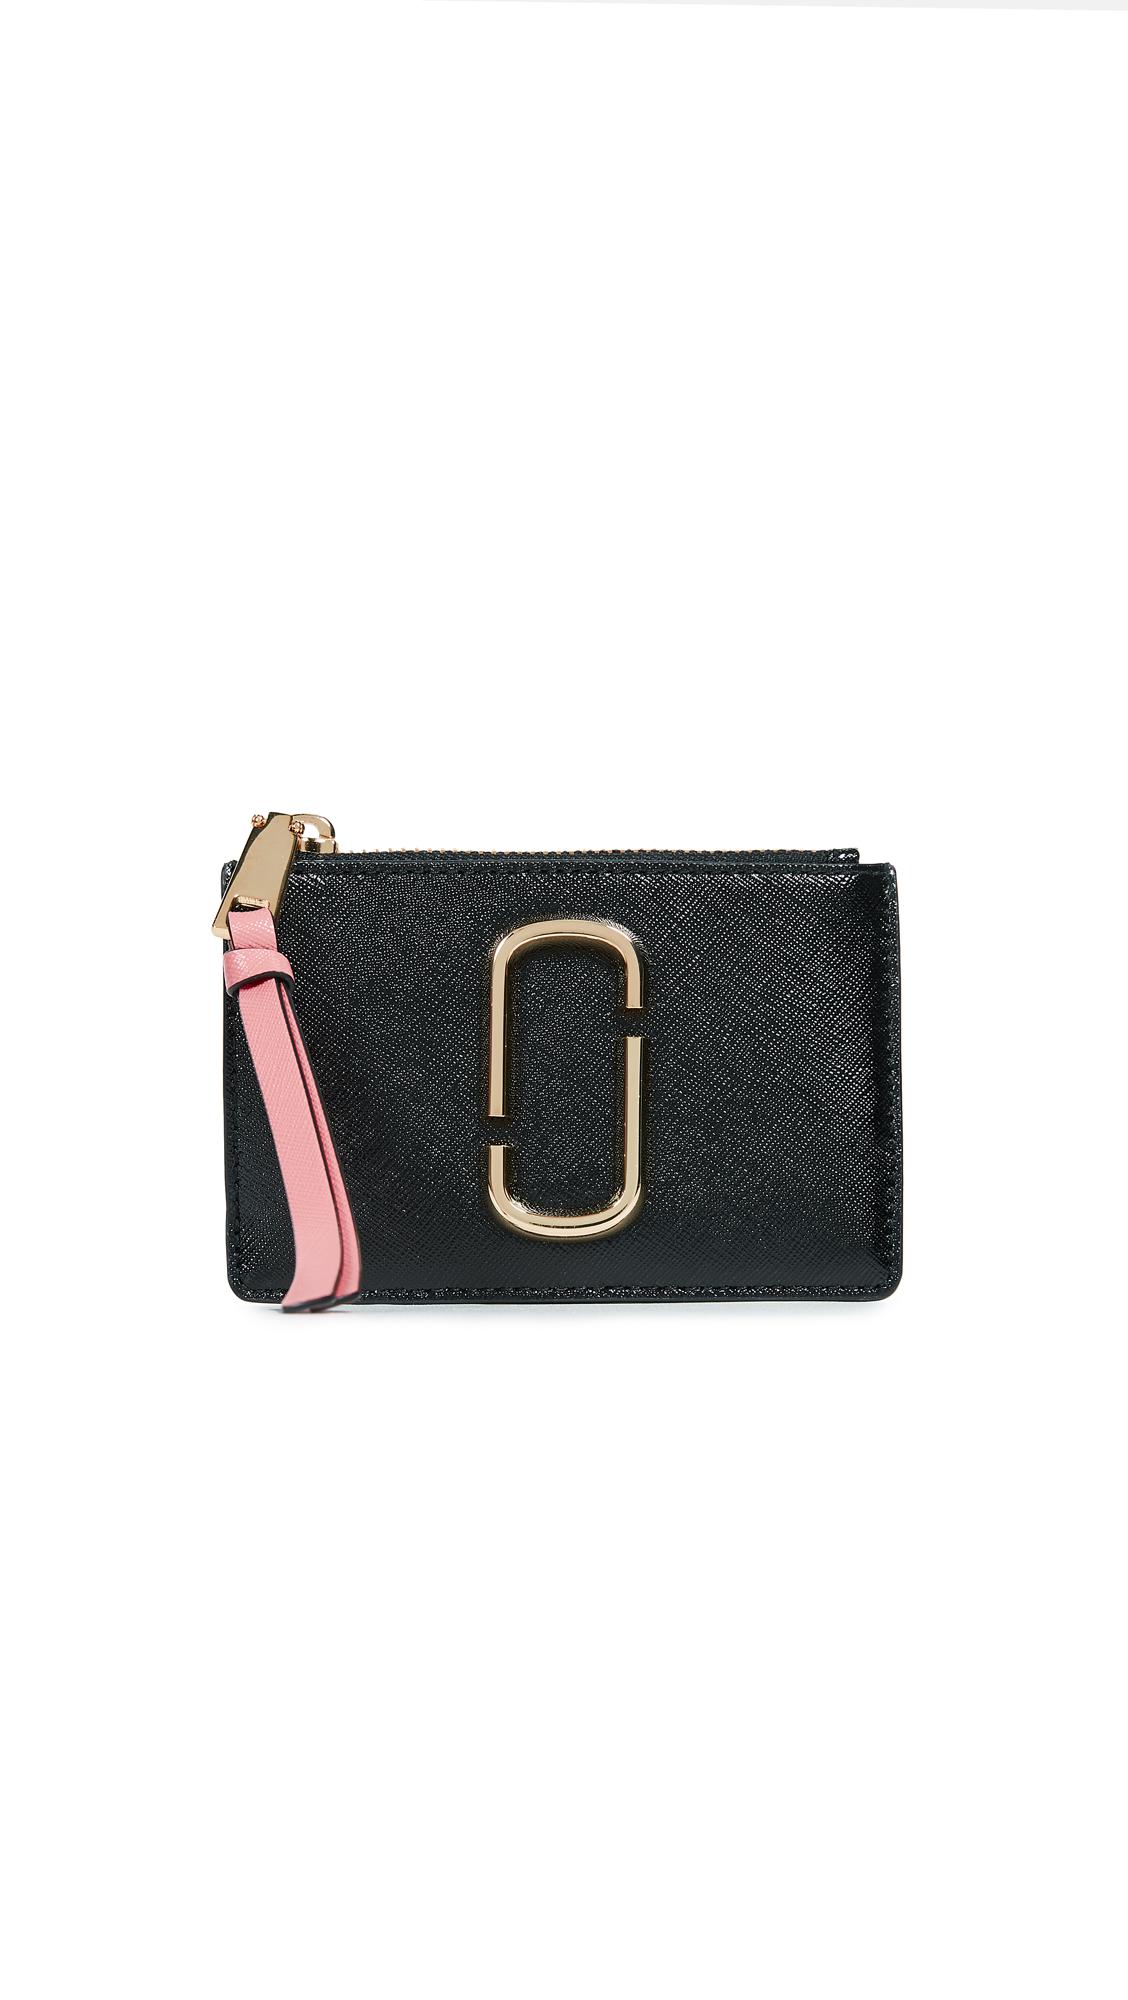 Marc Jacobs Leather Snapshot Top Zip Multi Wallet in Black/Rose 